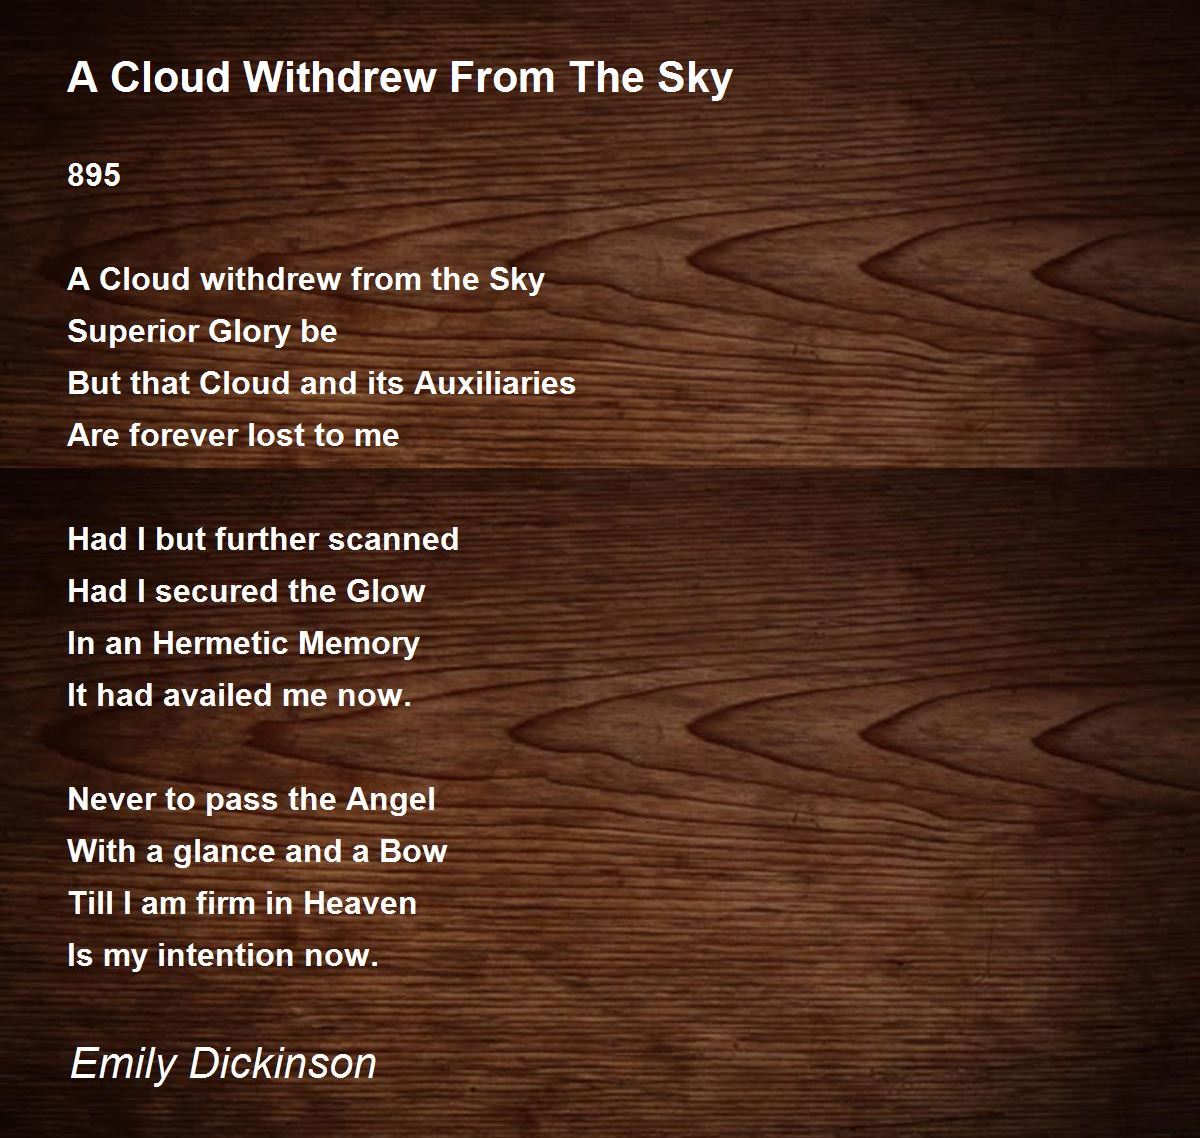 emily dickinson poems list